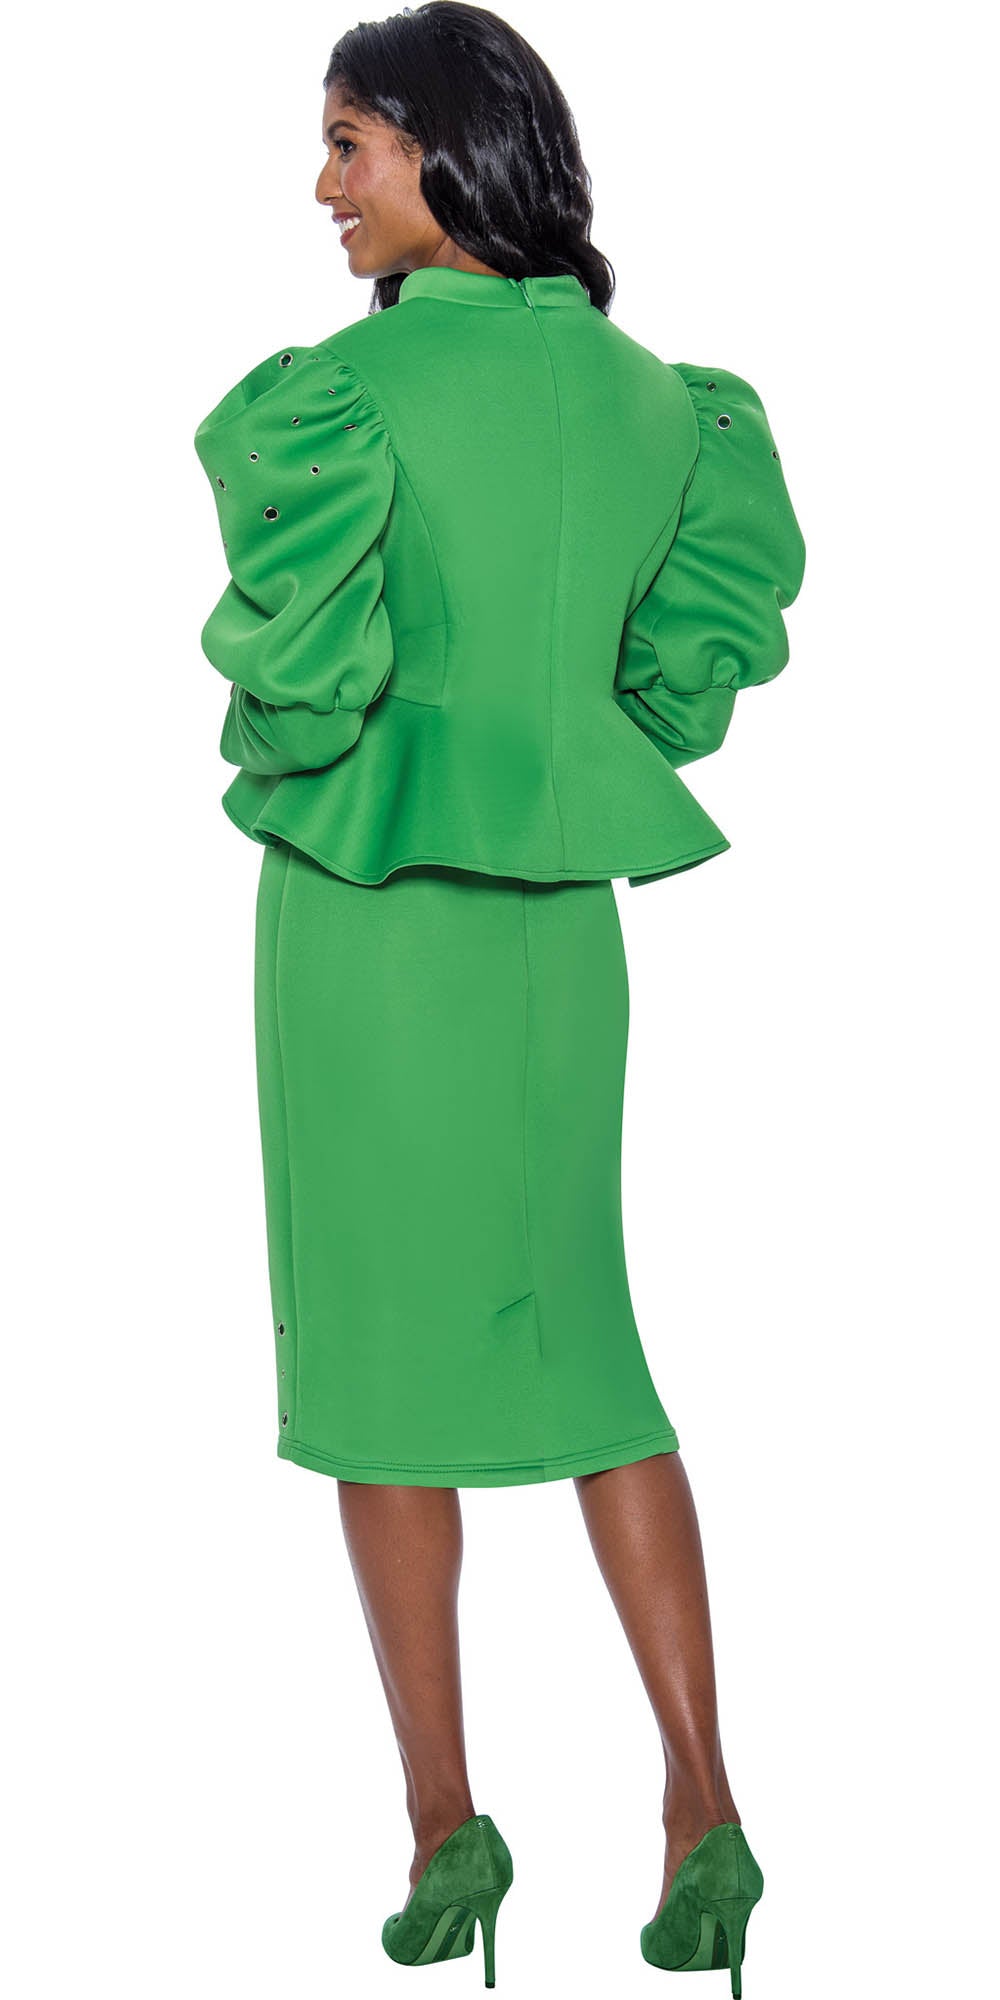 Stellar Looks - SL1682 - 2 PC Emerald Peplum Scuba Skirt Suit with Grommets